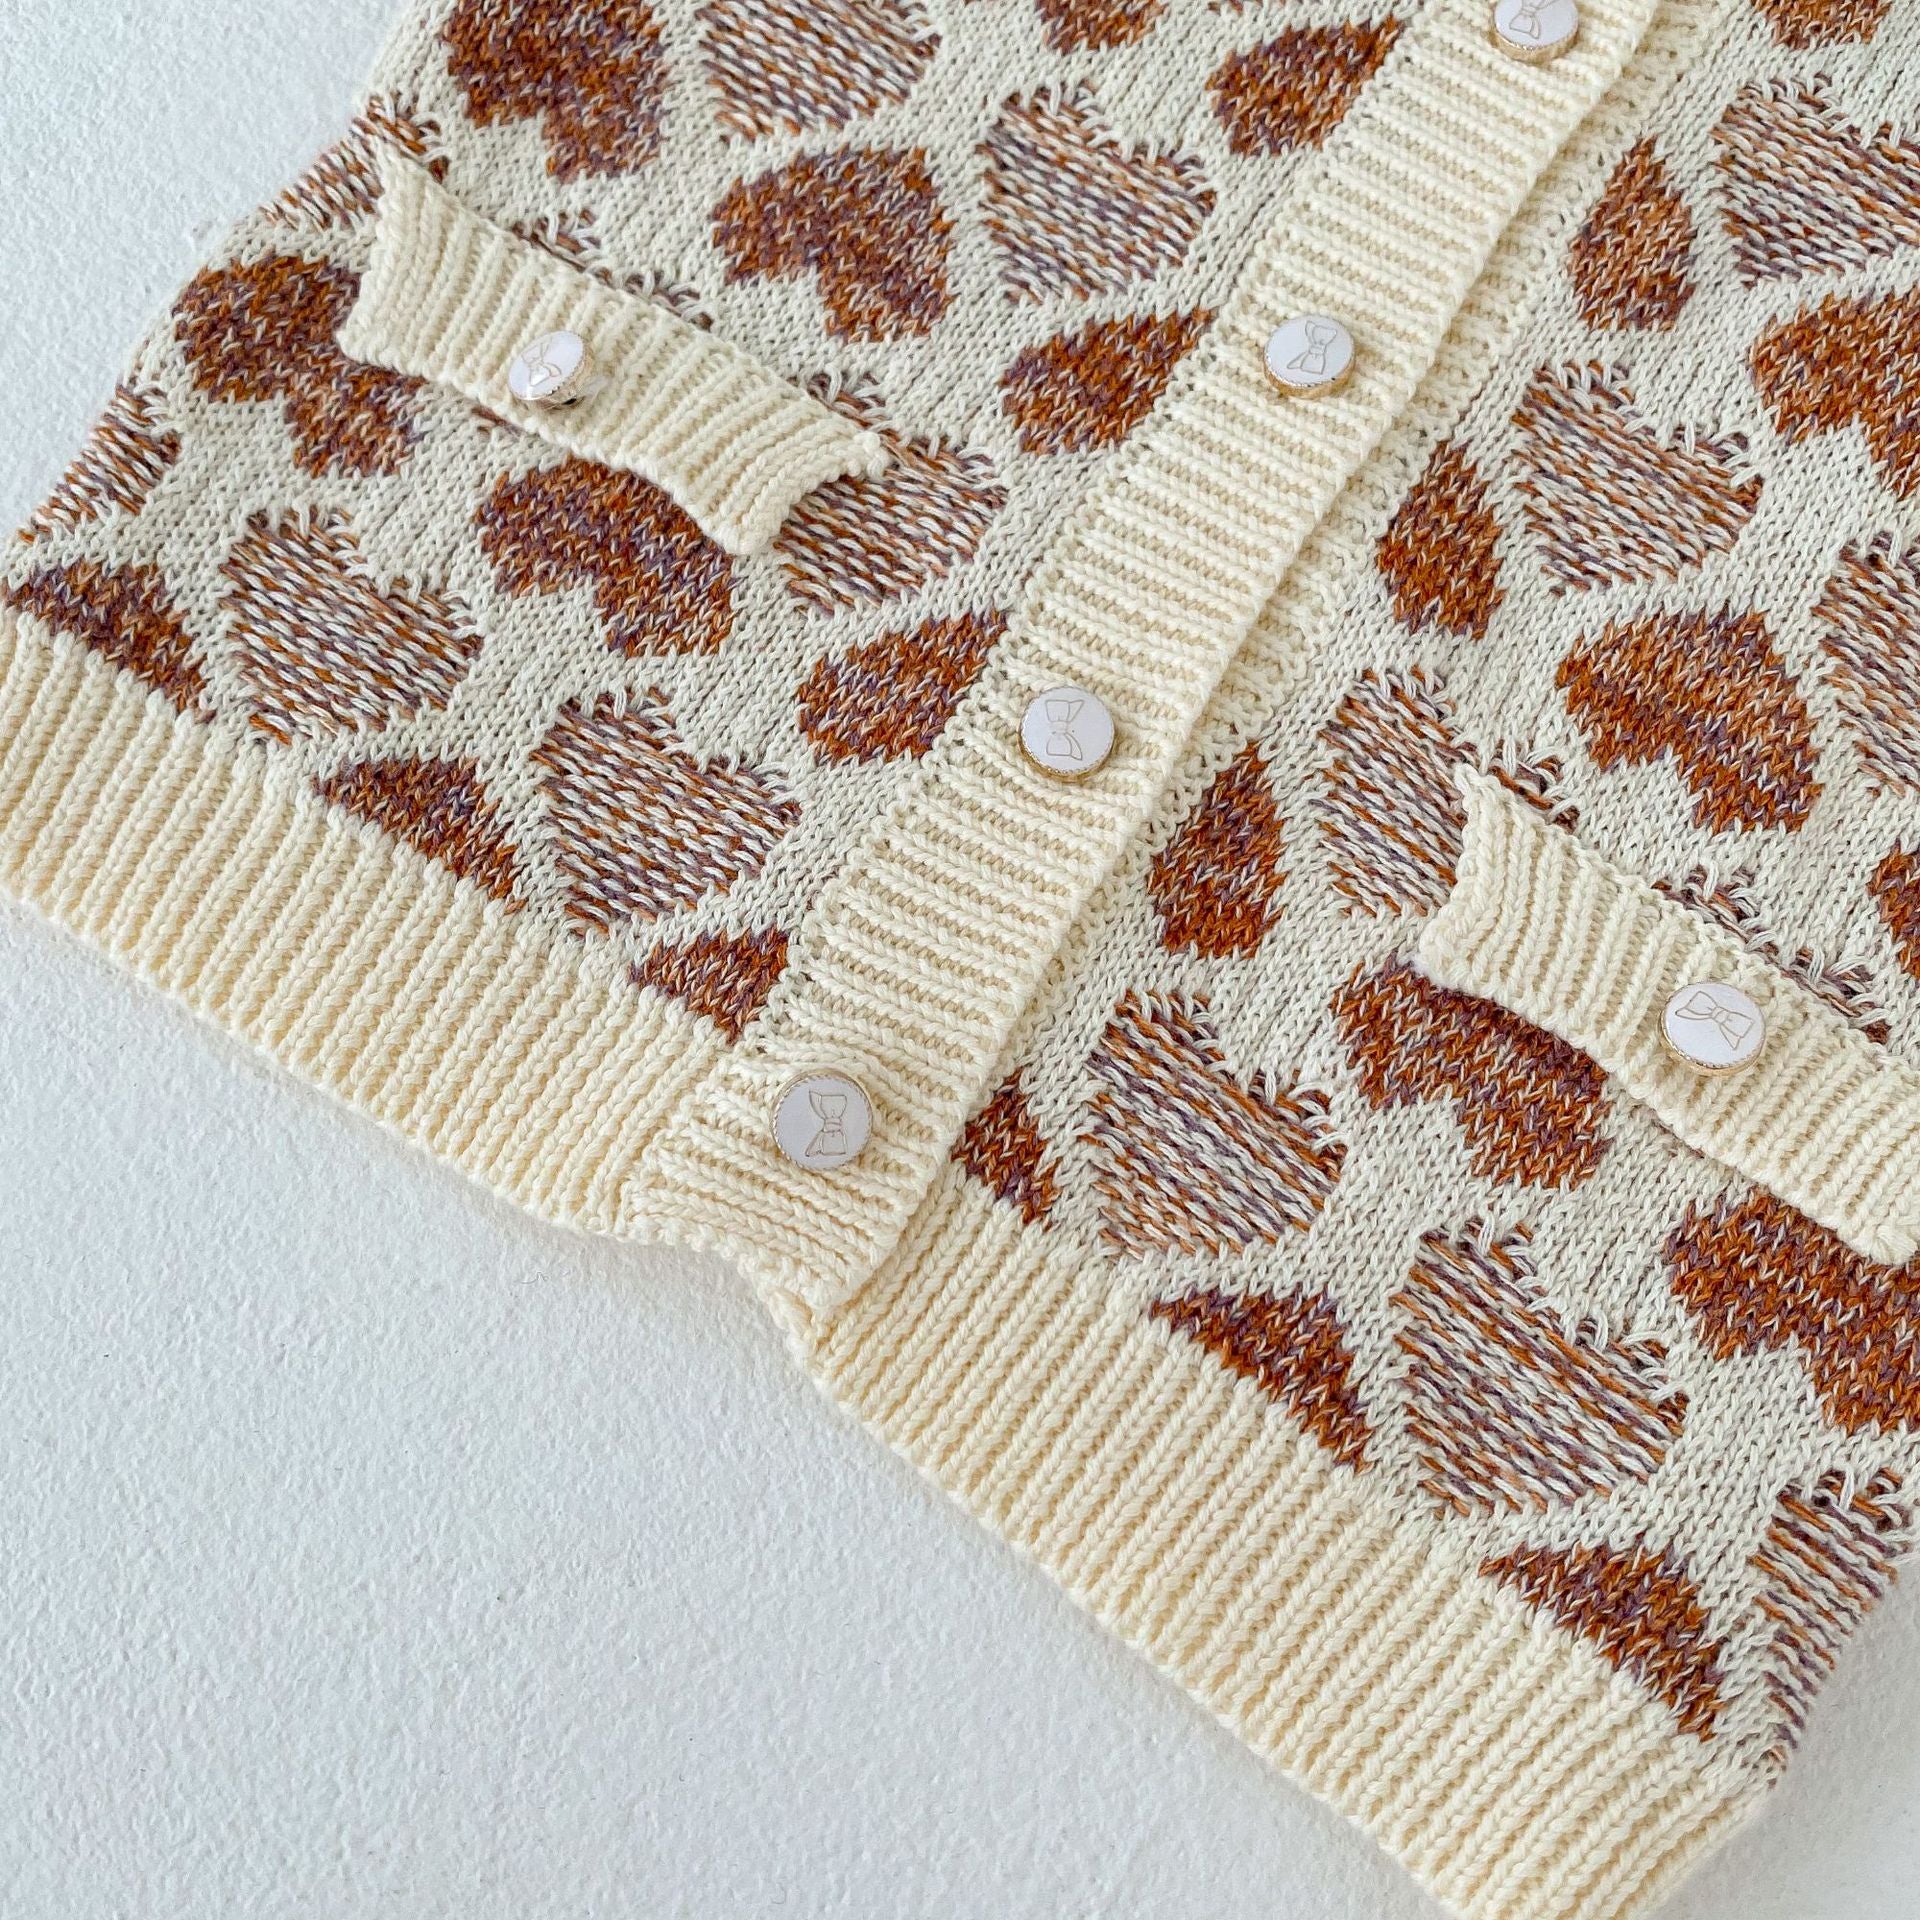 Design knit heart cardigan/overalls [N3015]